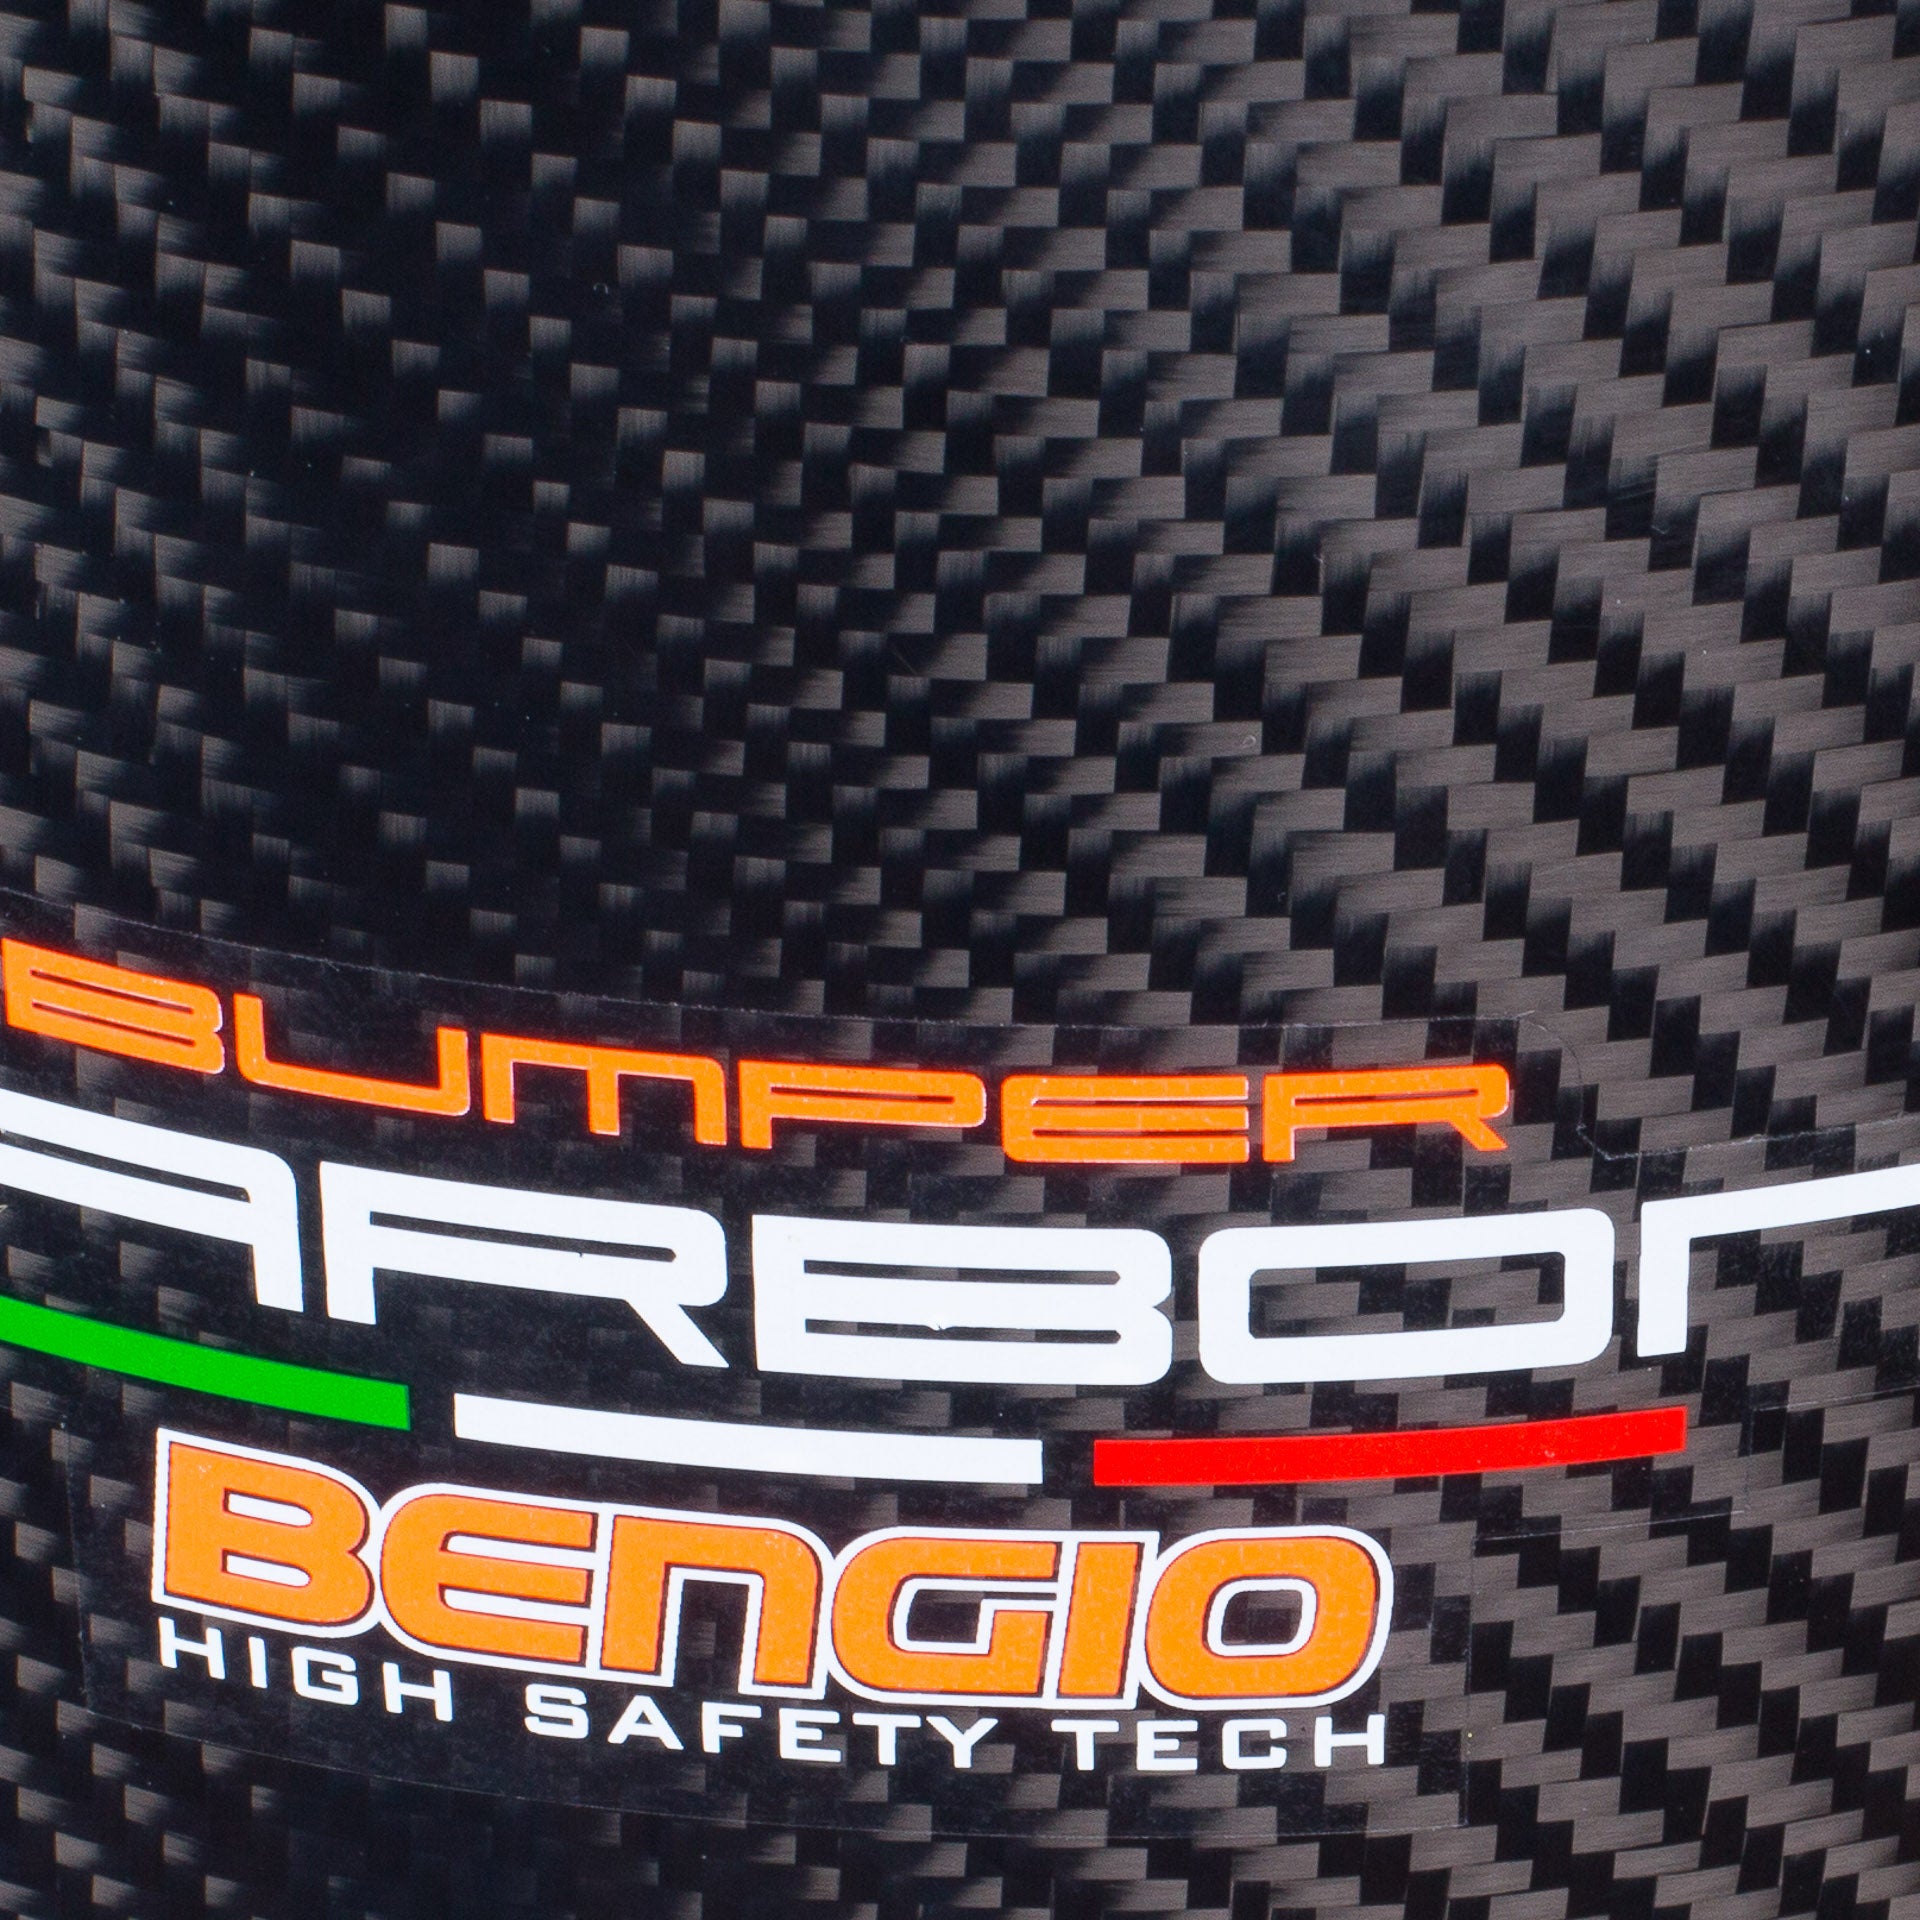 BENGIO CRBXL BUMPER Carbon Захист ребер для картингу, карбон, розмір XL Photo-6 